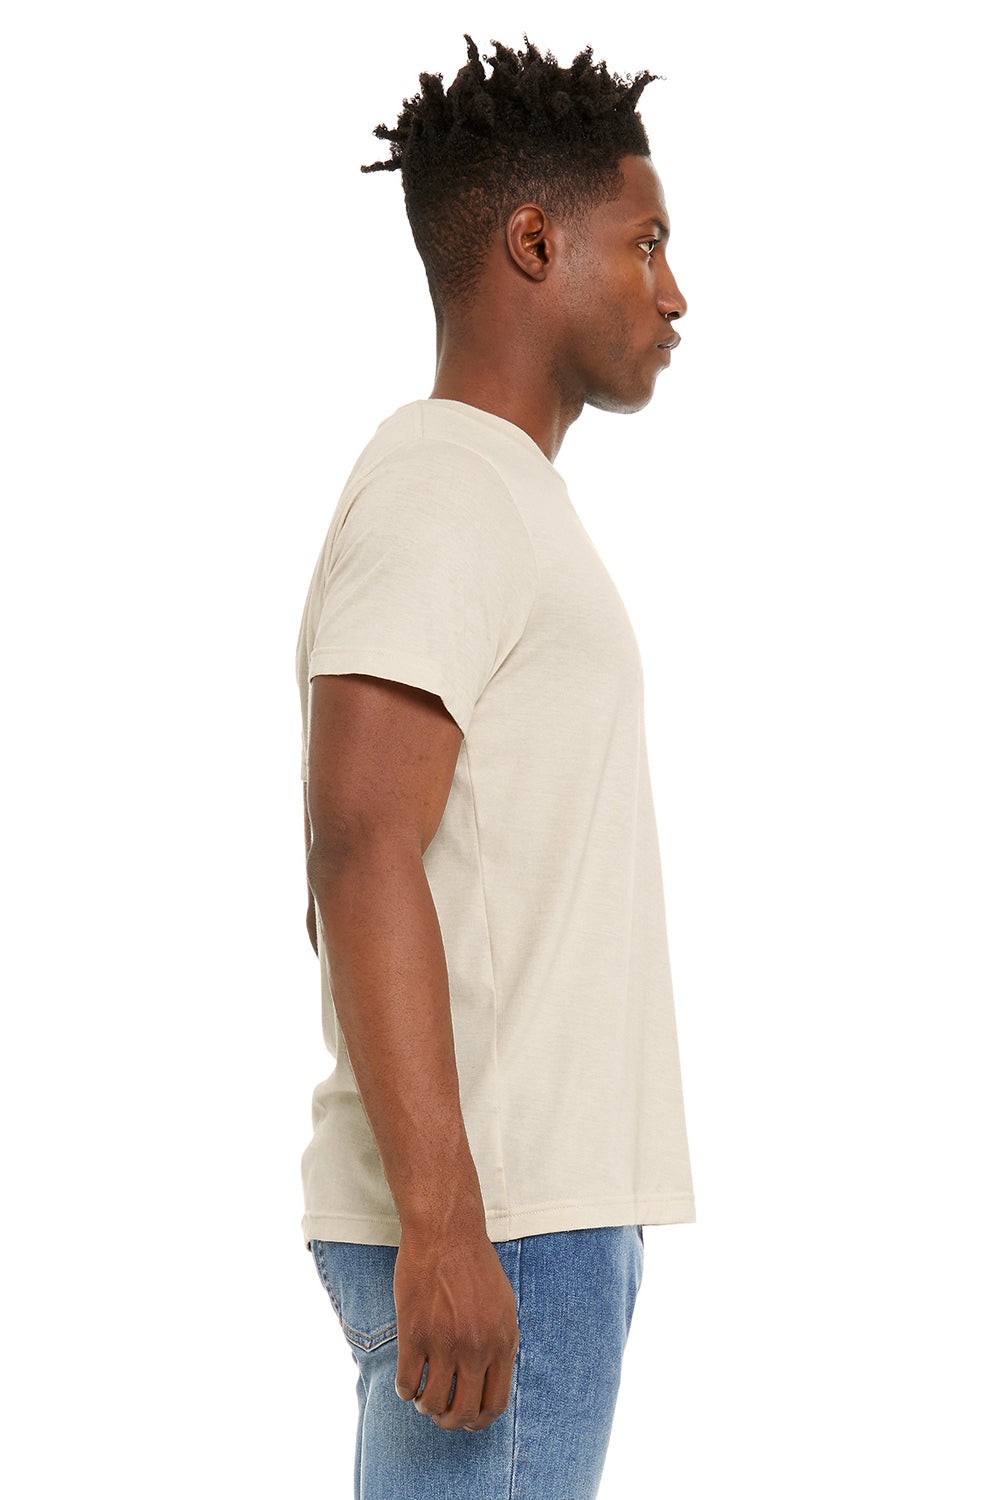 Bella + Canvas BC3301/3301C/3301 Mens Jersey Short Sleeve Crewneck T-Shirt Heather Dust Model Side